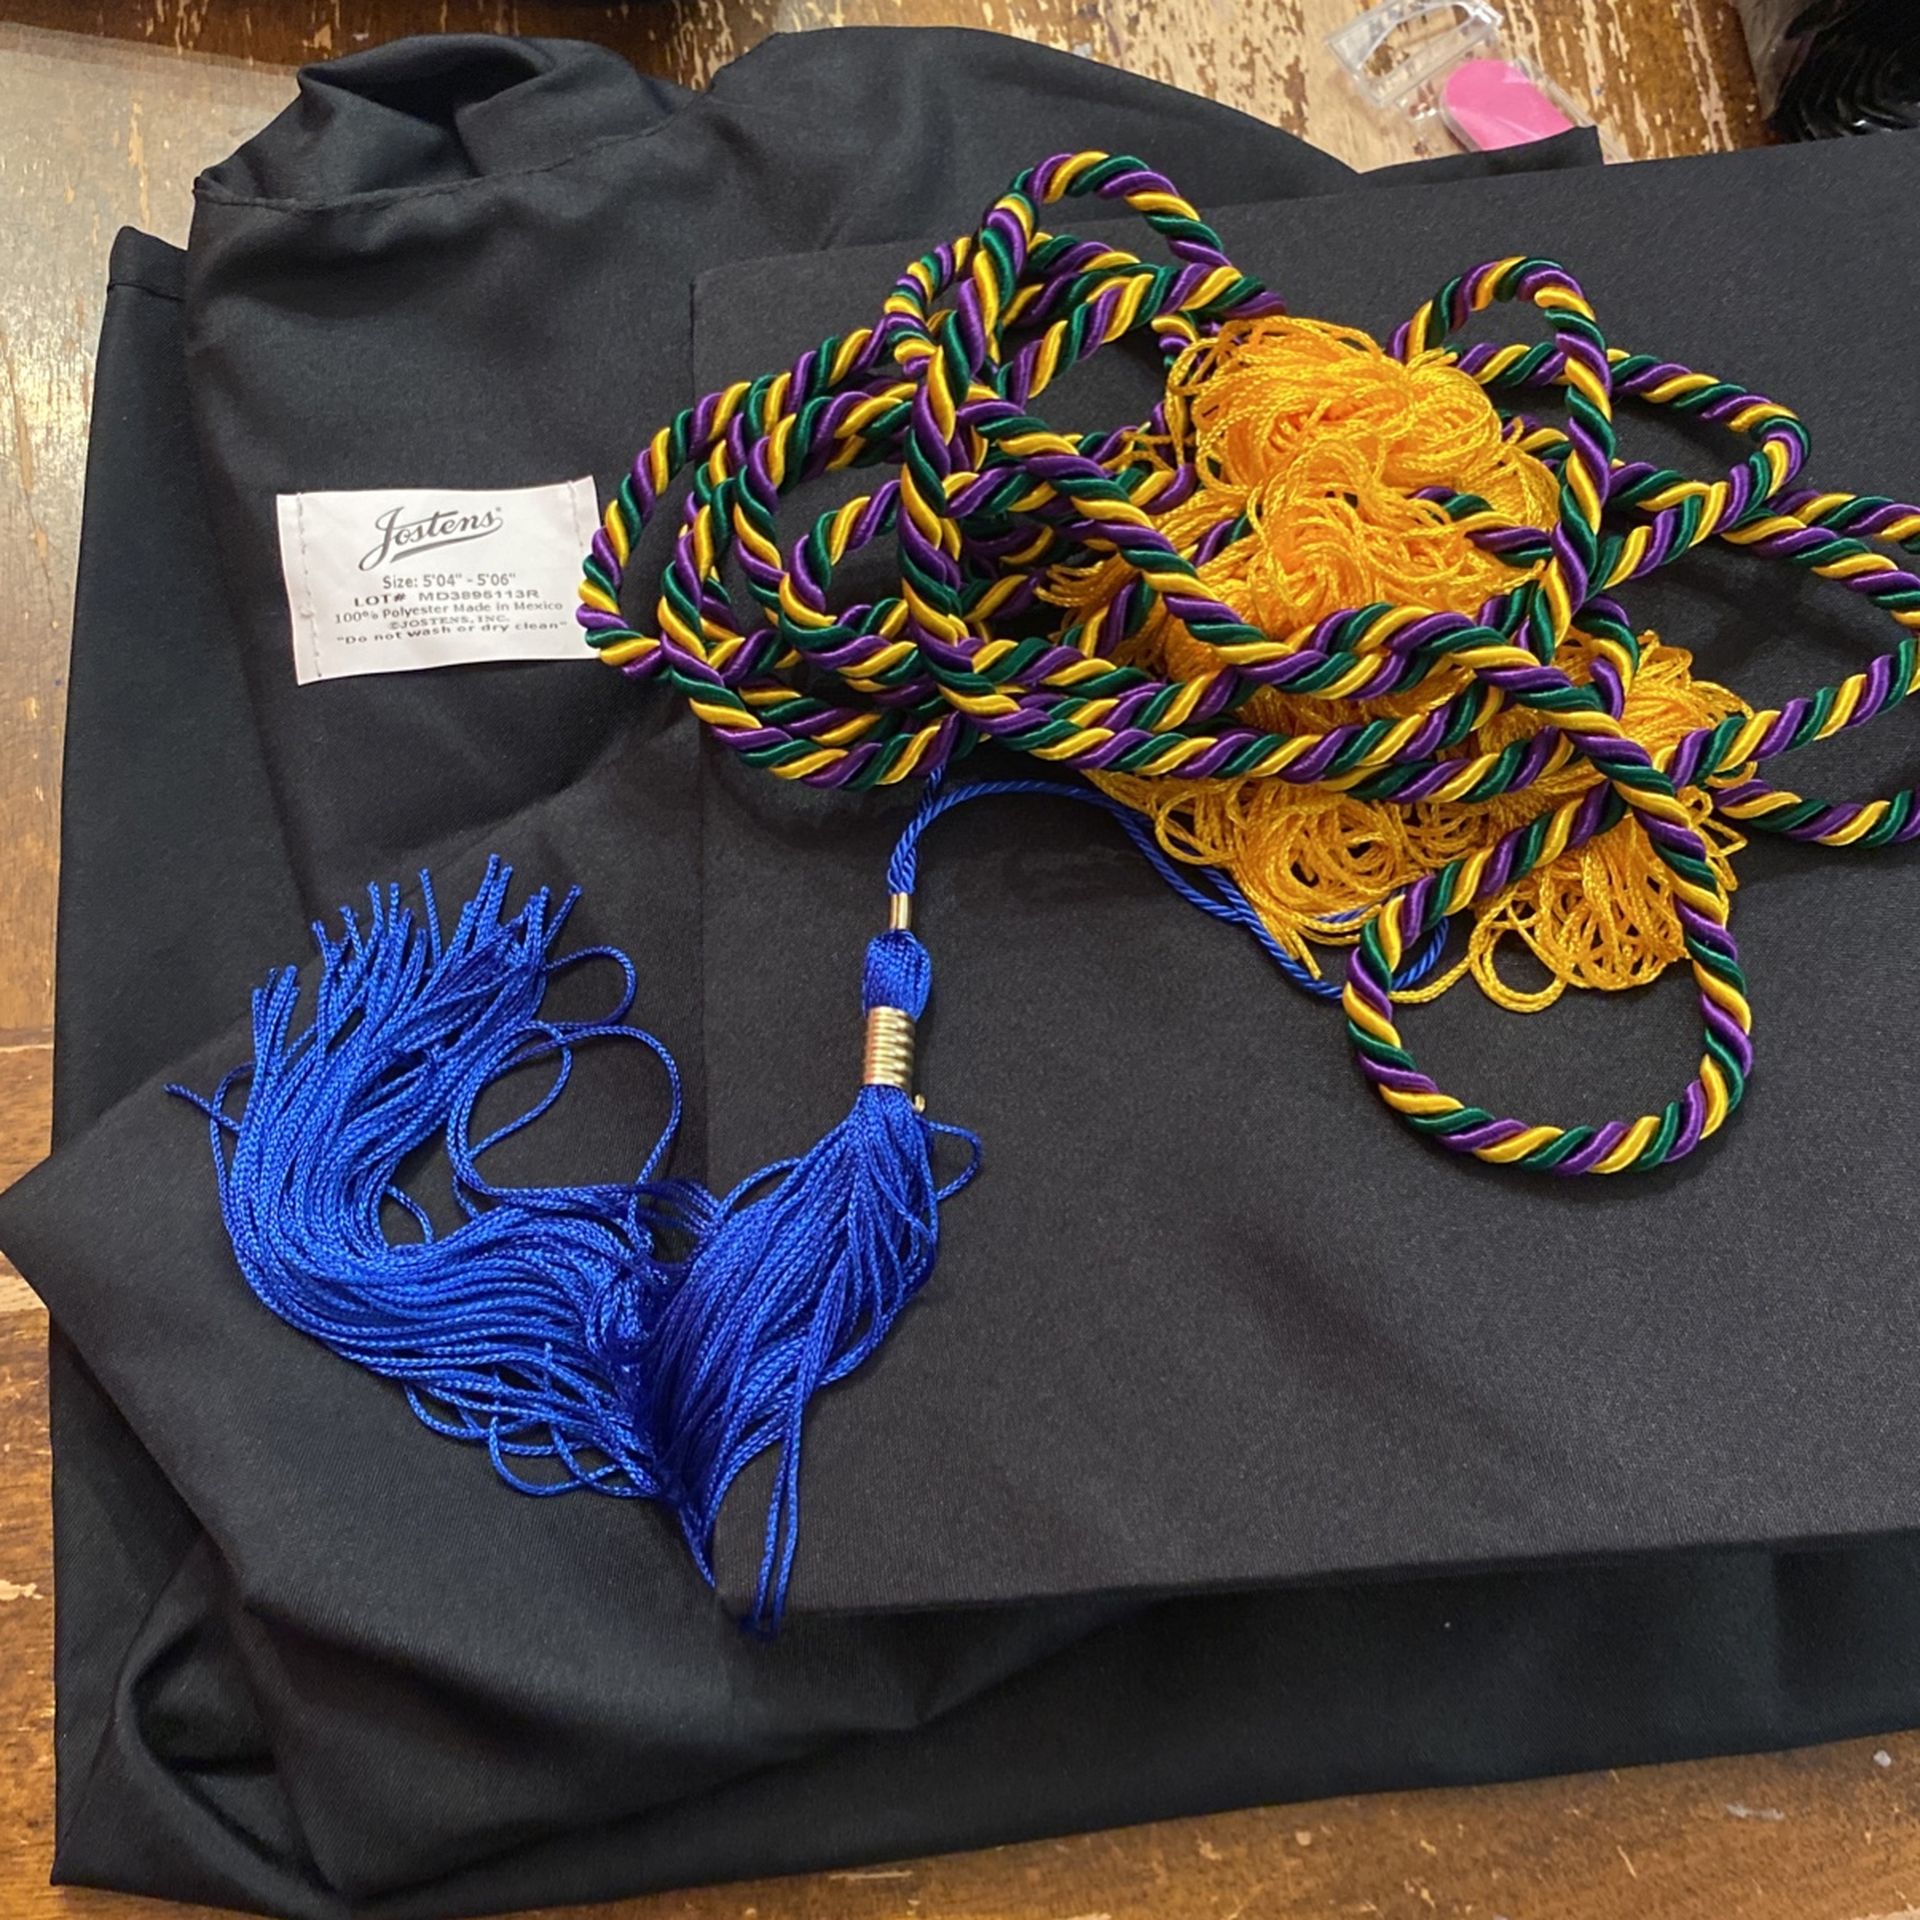 Black High school Graduation Gown and Cap